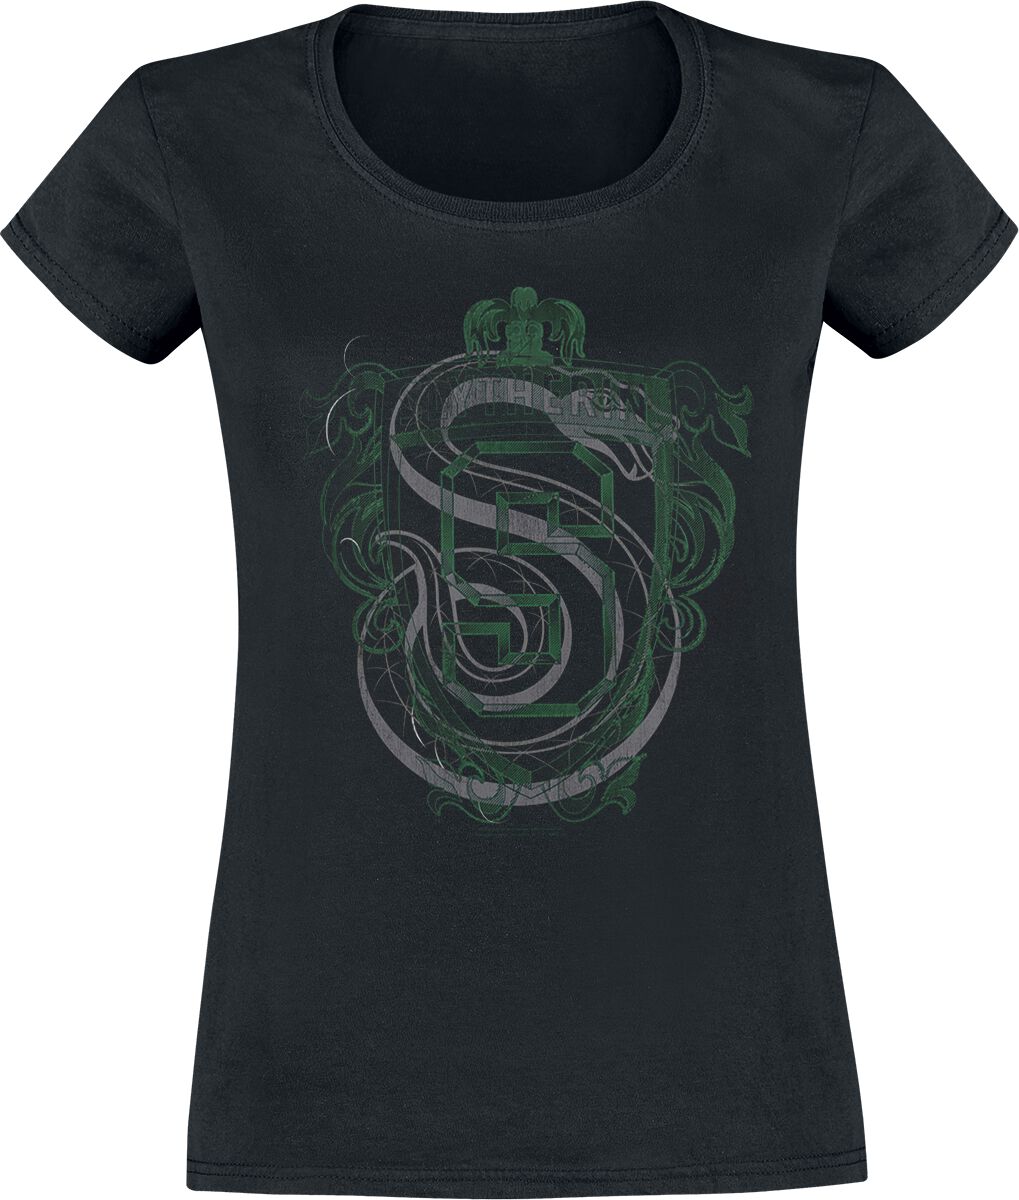 Harry Potter Slytherin - Snake Crest T-Shirt black